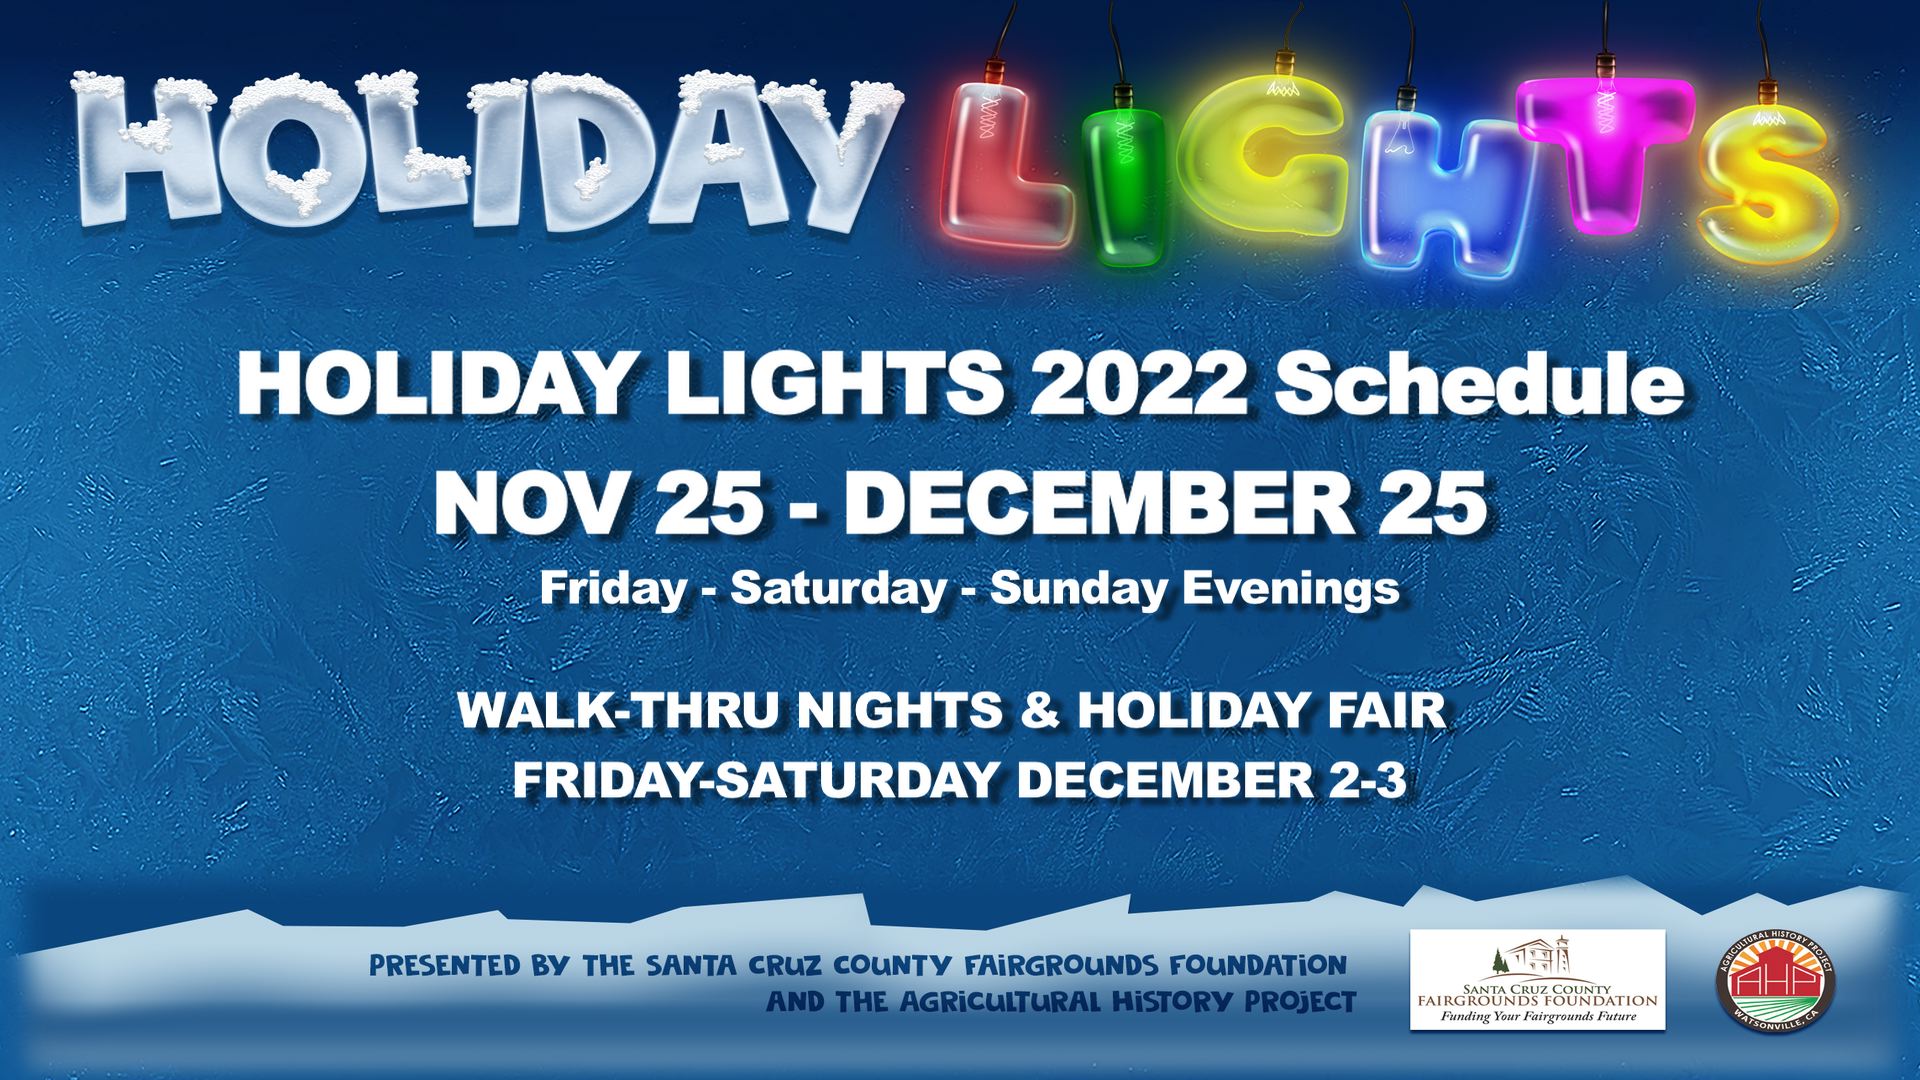 Holiday Lights Santa Cruz County Fairgrounds Foundation